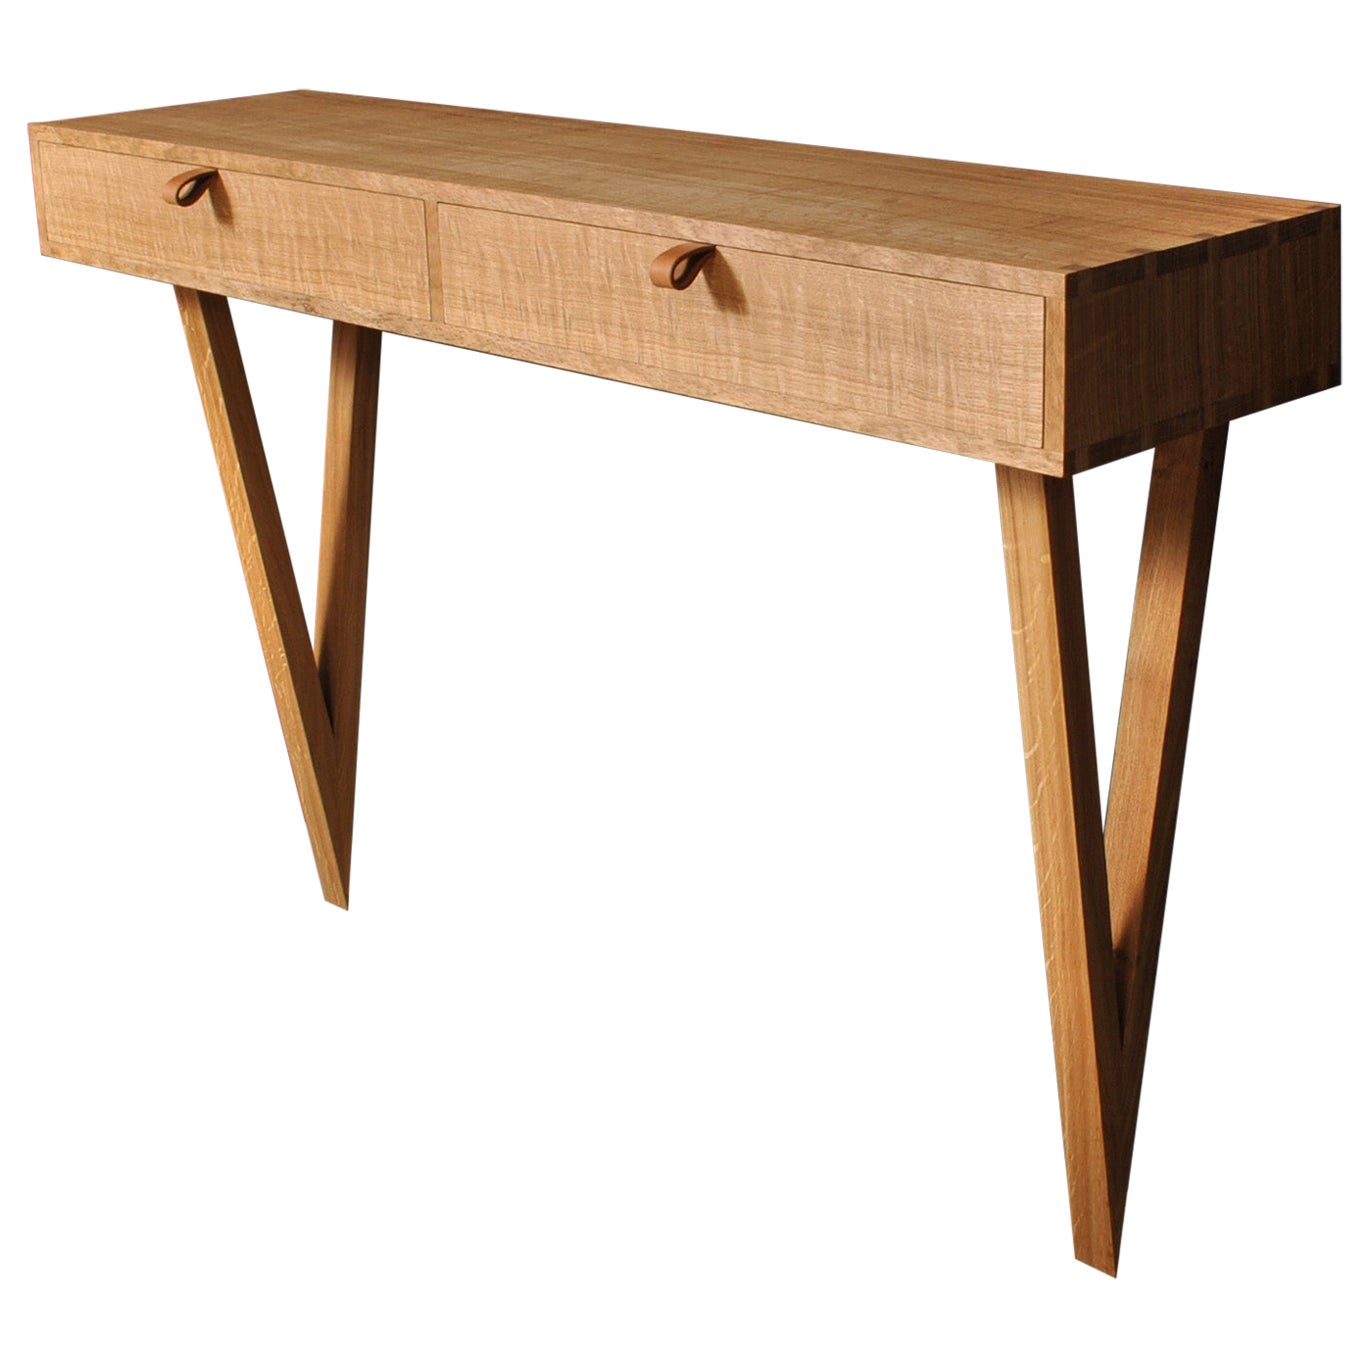 Modernist Oak Console Table